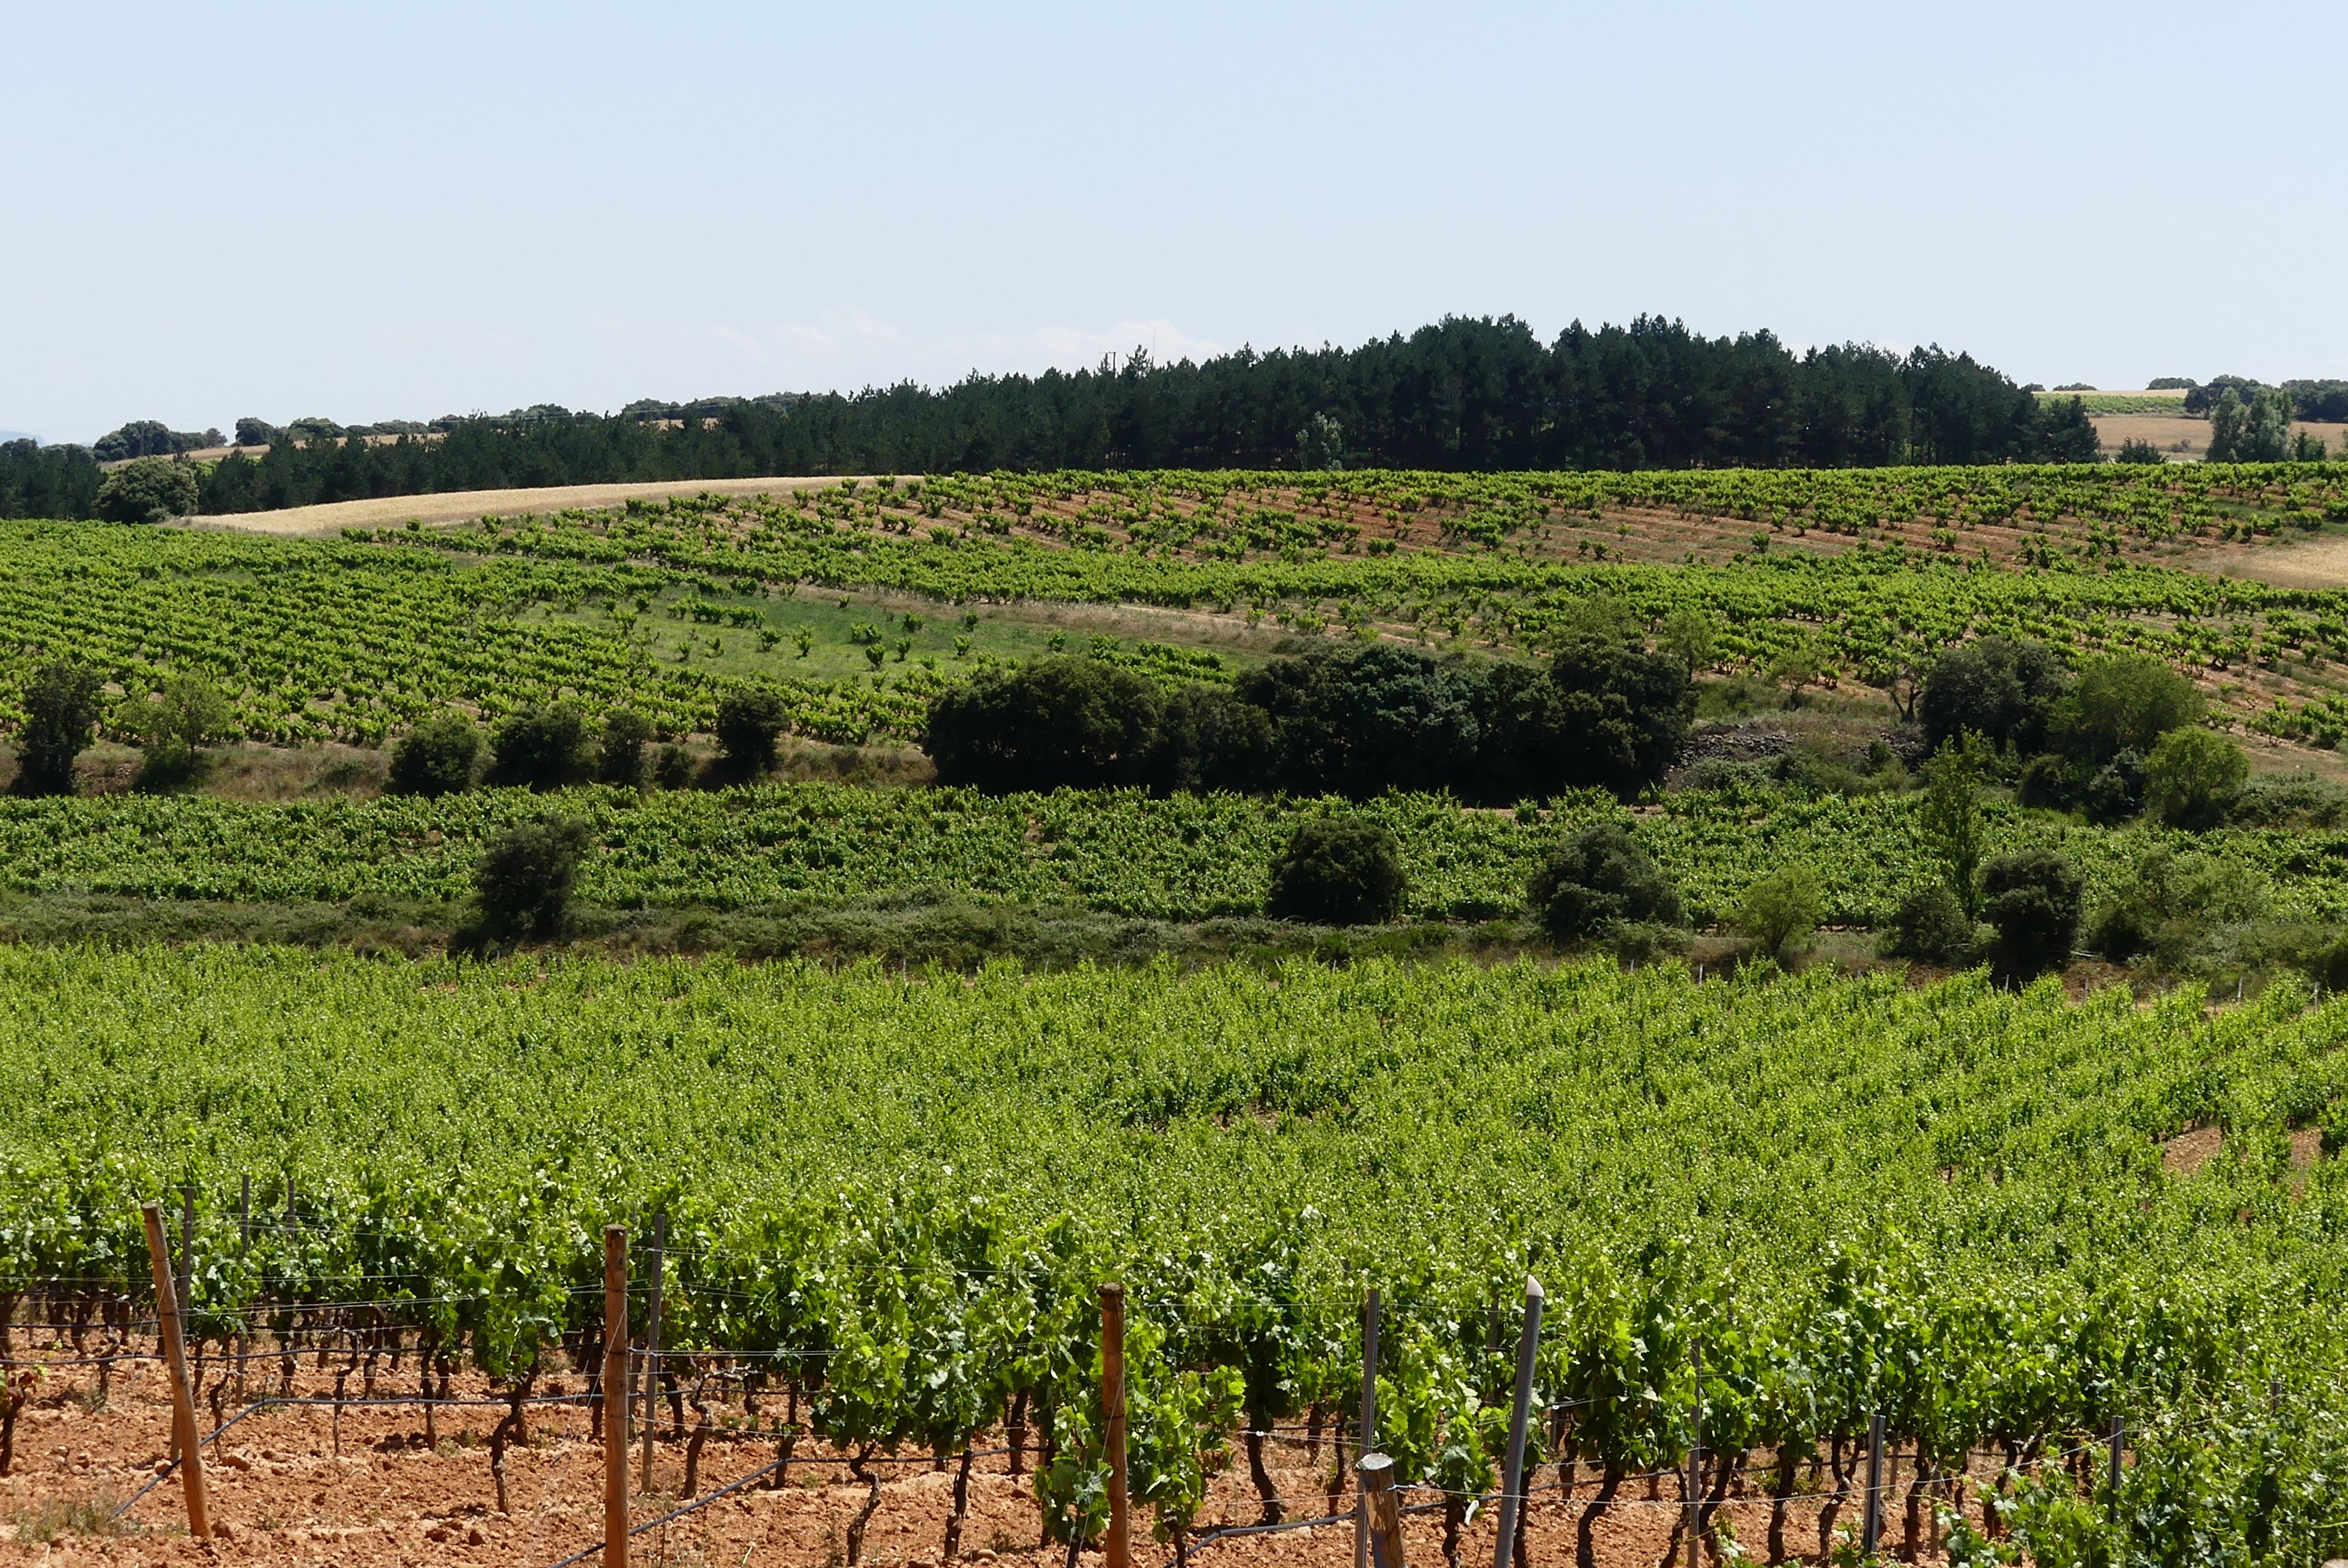 A vineuyard in Rioja